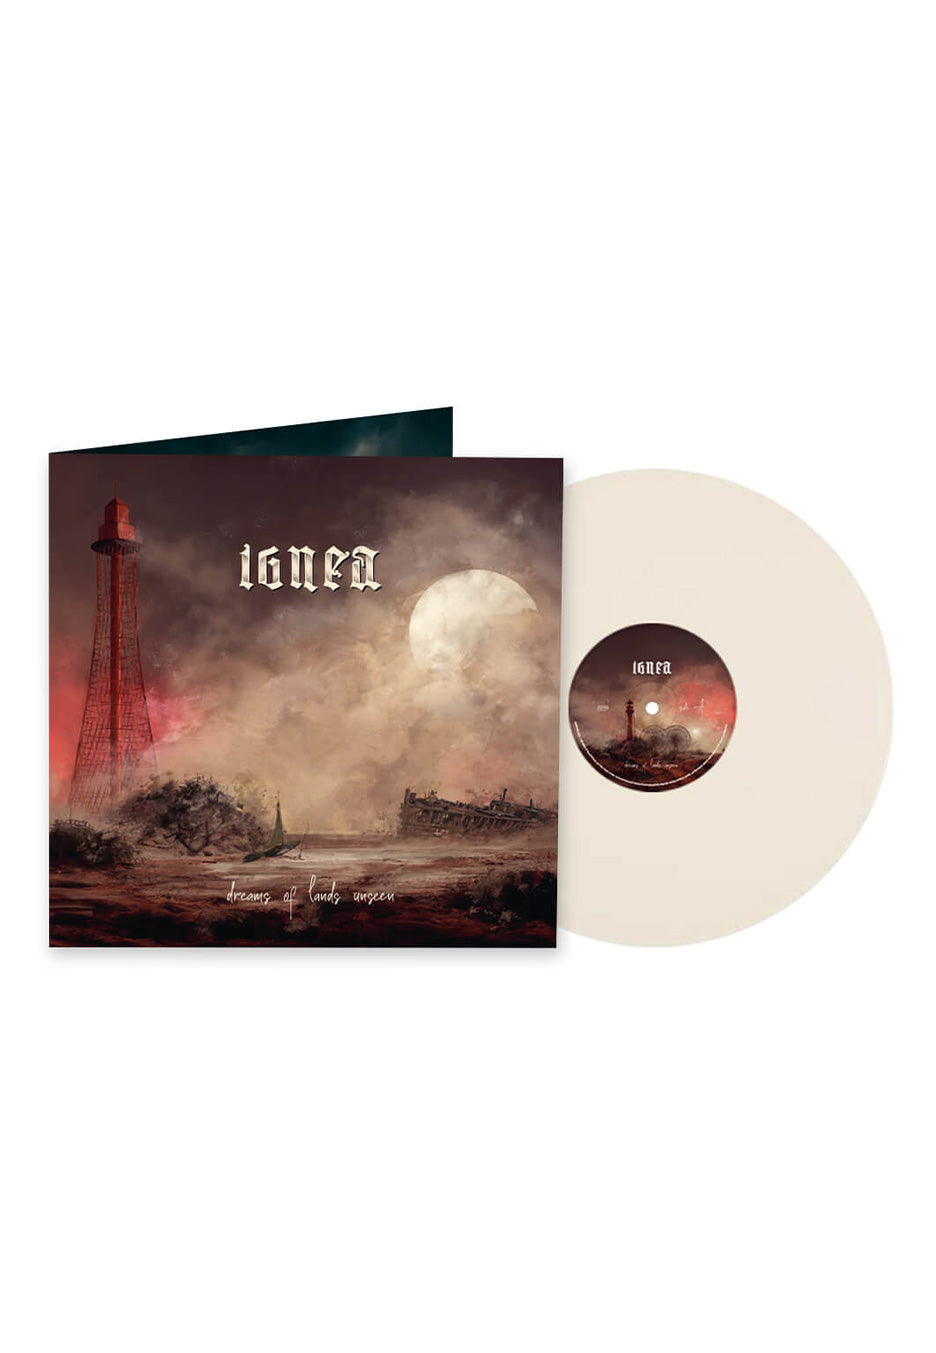 Ignea - Dreams Of Lands Unseen Ltd. Cream - Colored Vinyl